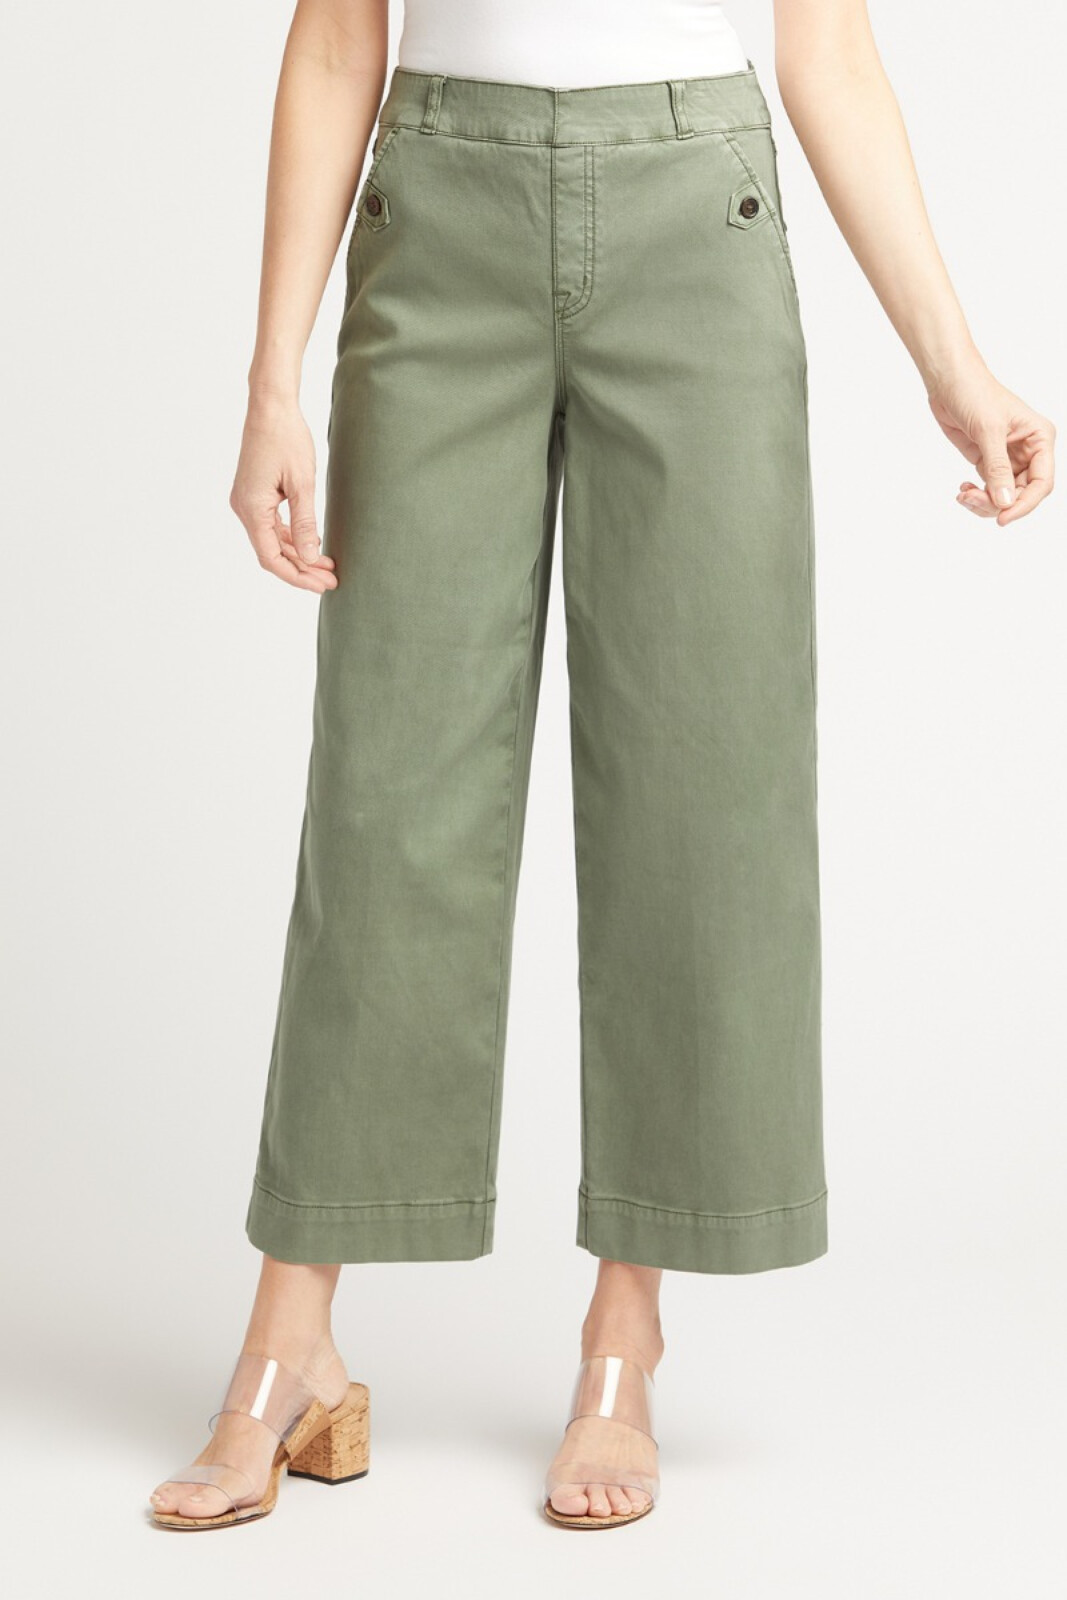 Shop Spanx Polished Stretch-Cotton Shorts